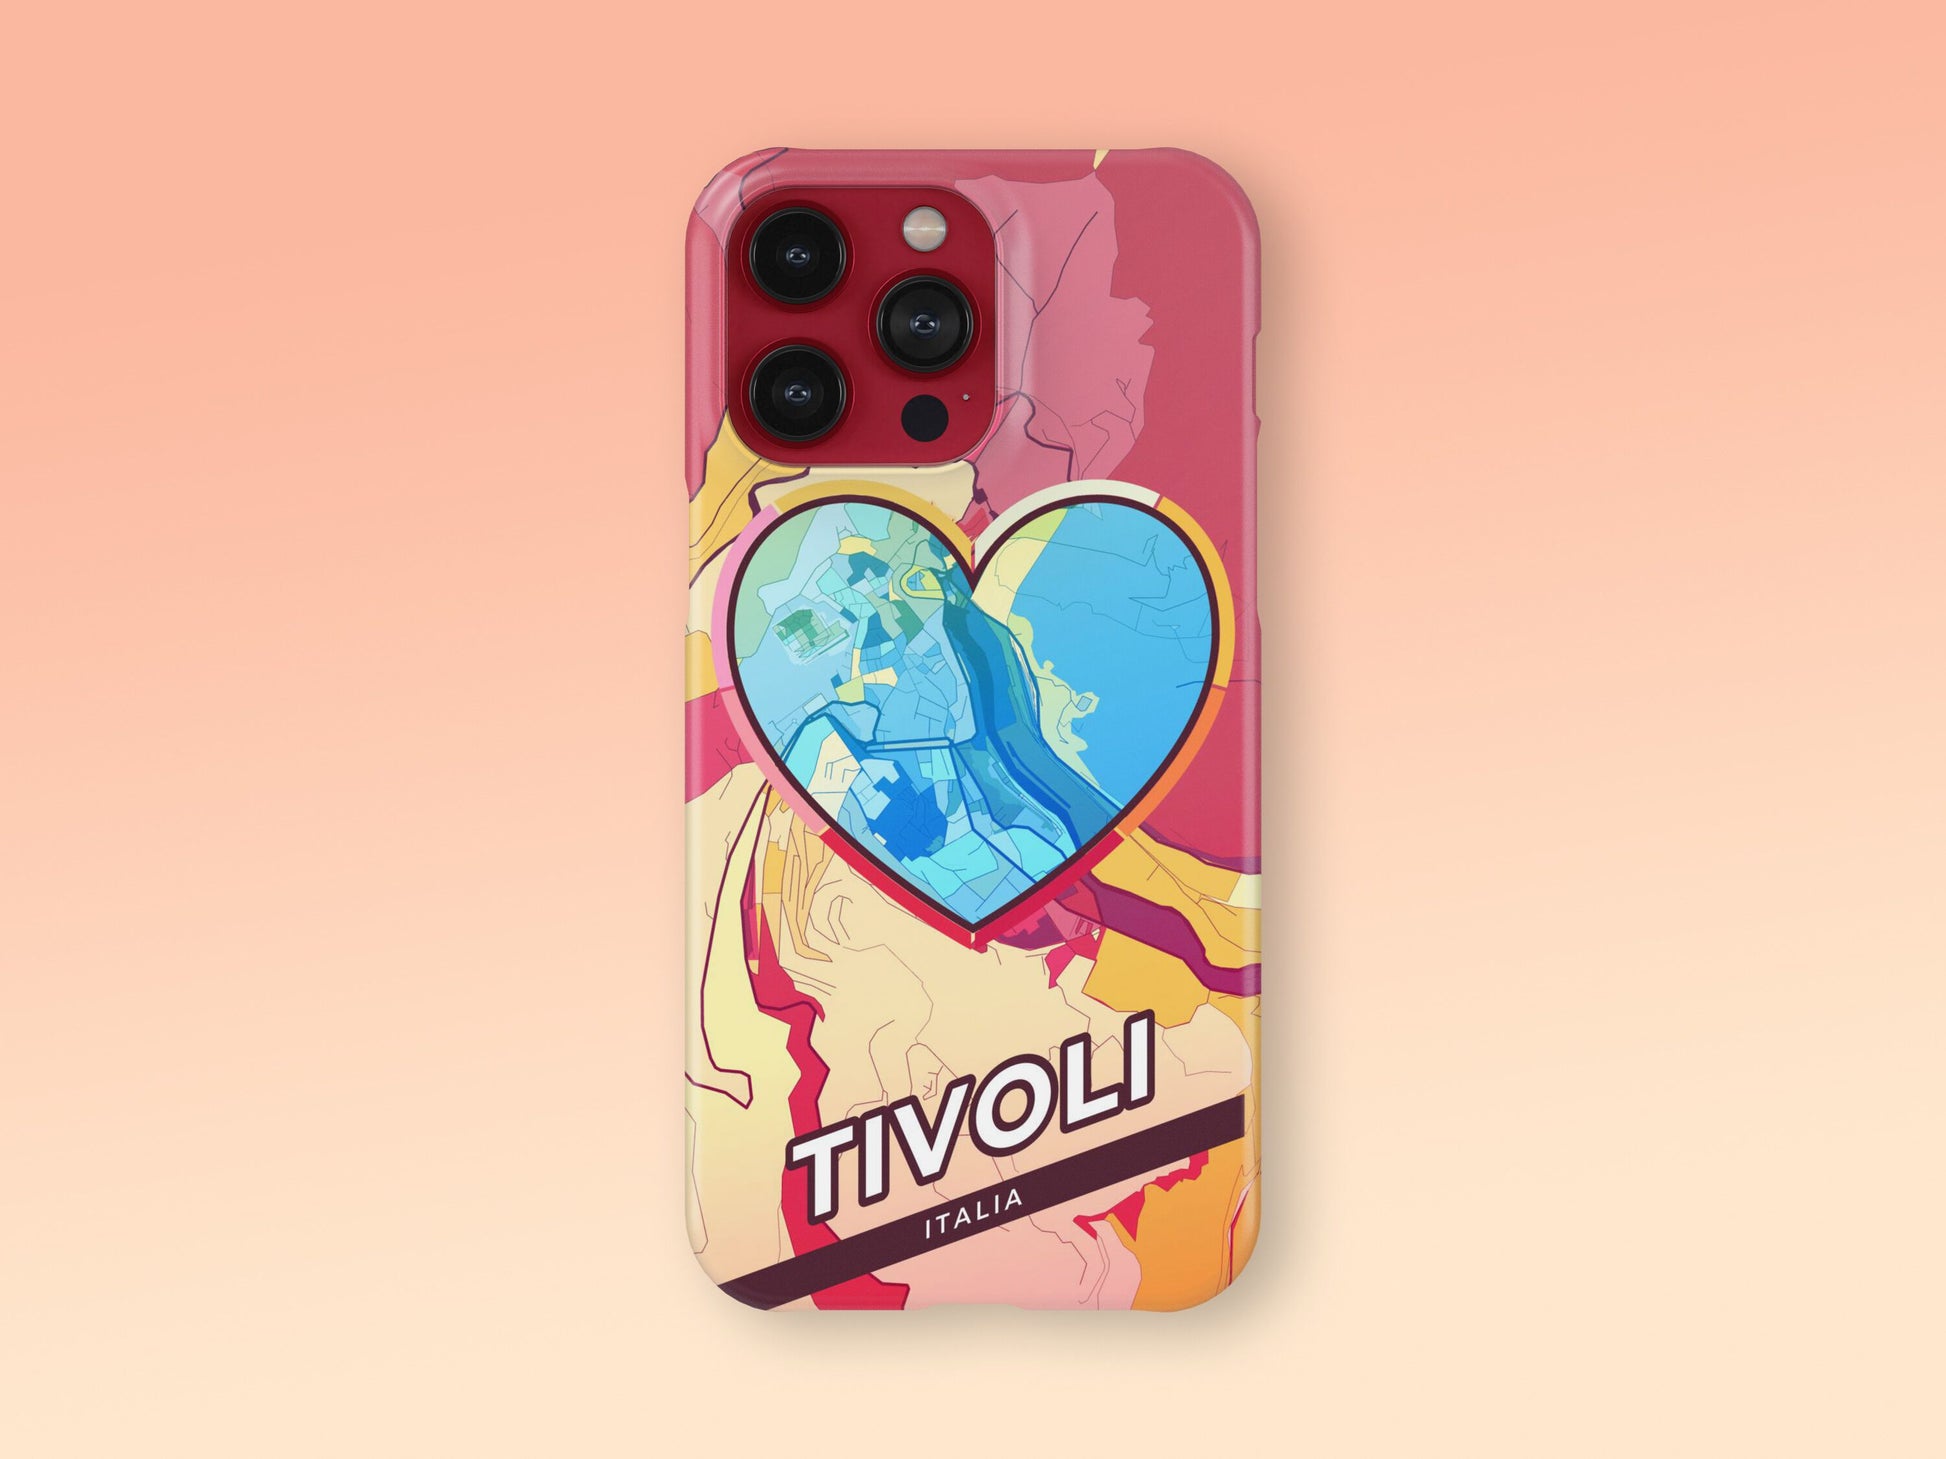 Tivoli Italy slim phone case with colorful icon 2